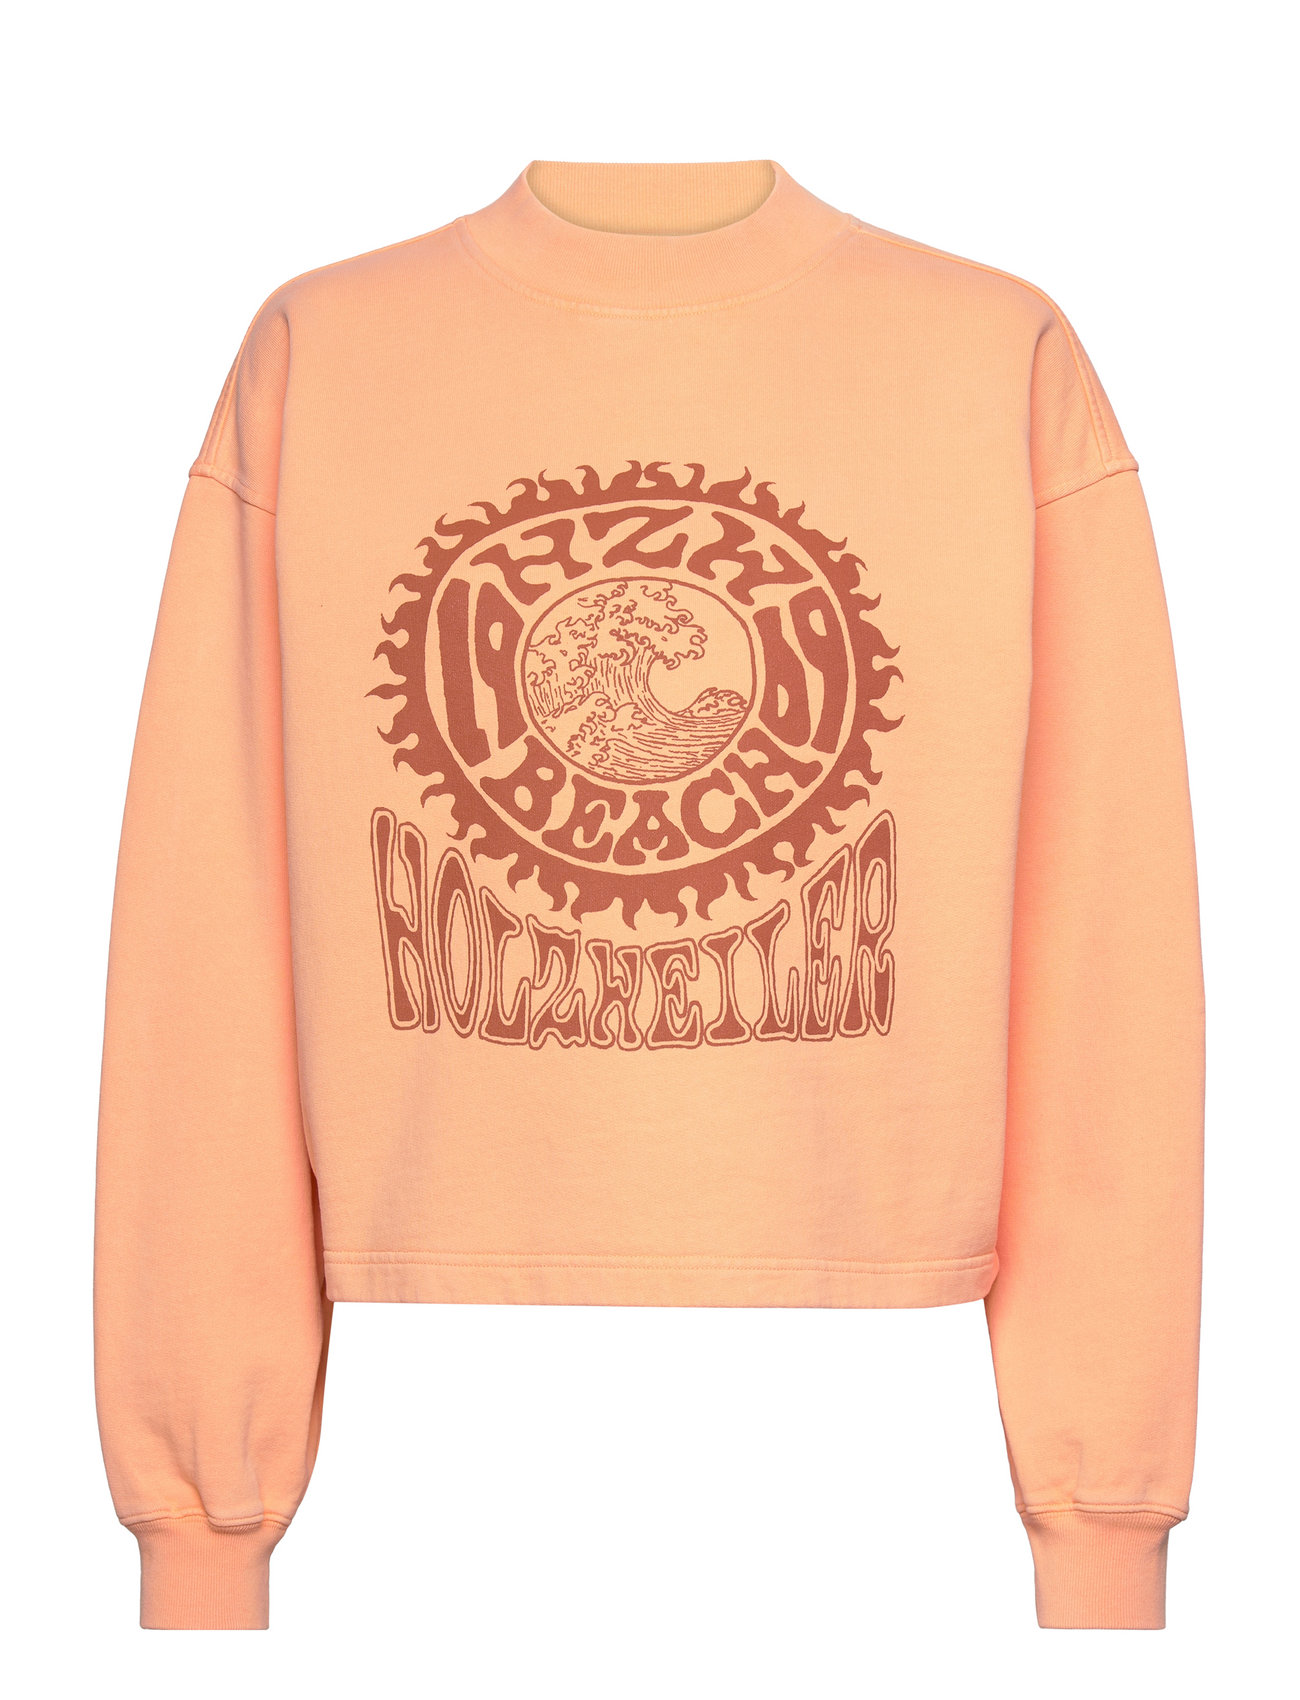 W. Mezzanine Crop Surf Crew Tops Sweatshirts & Hoodies Sweatshirts Orange HOLZWEILER